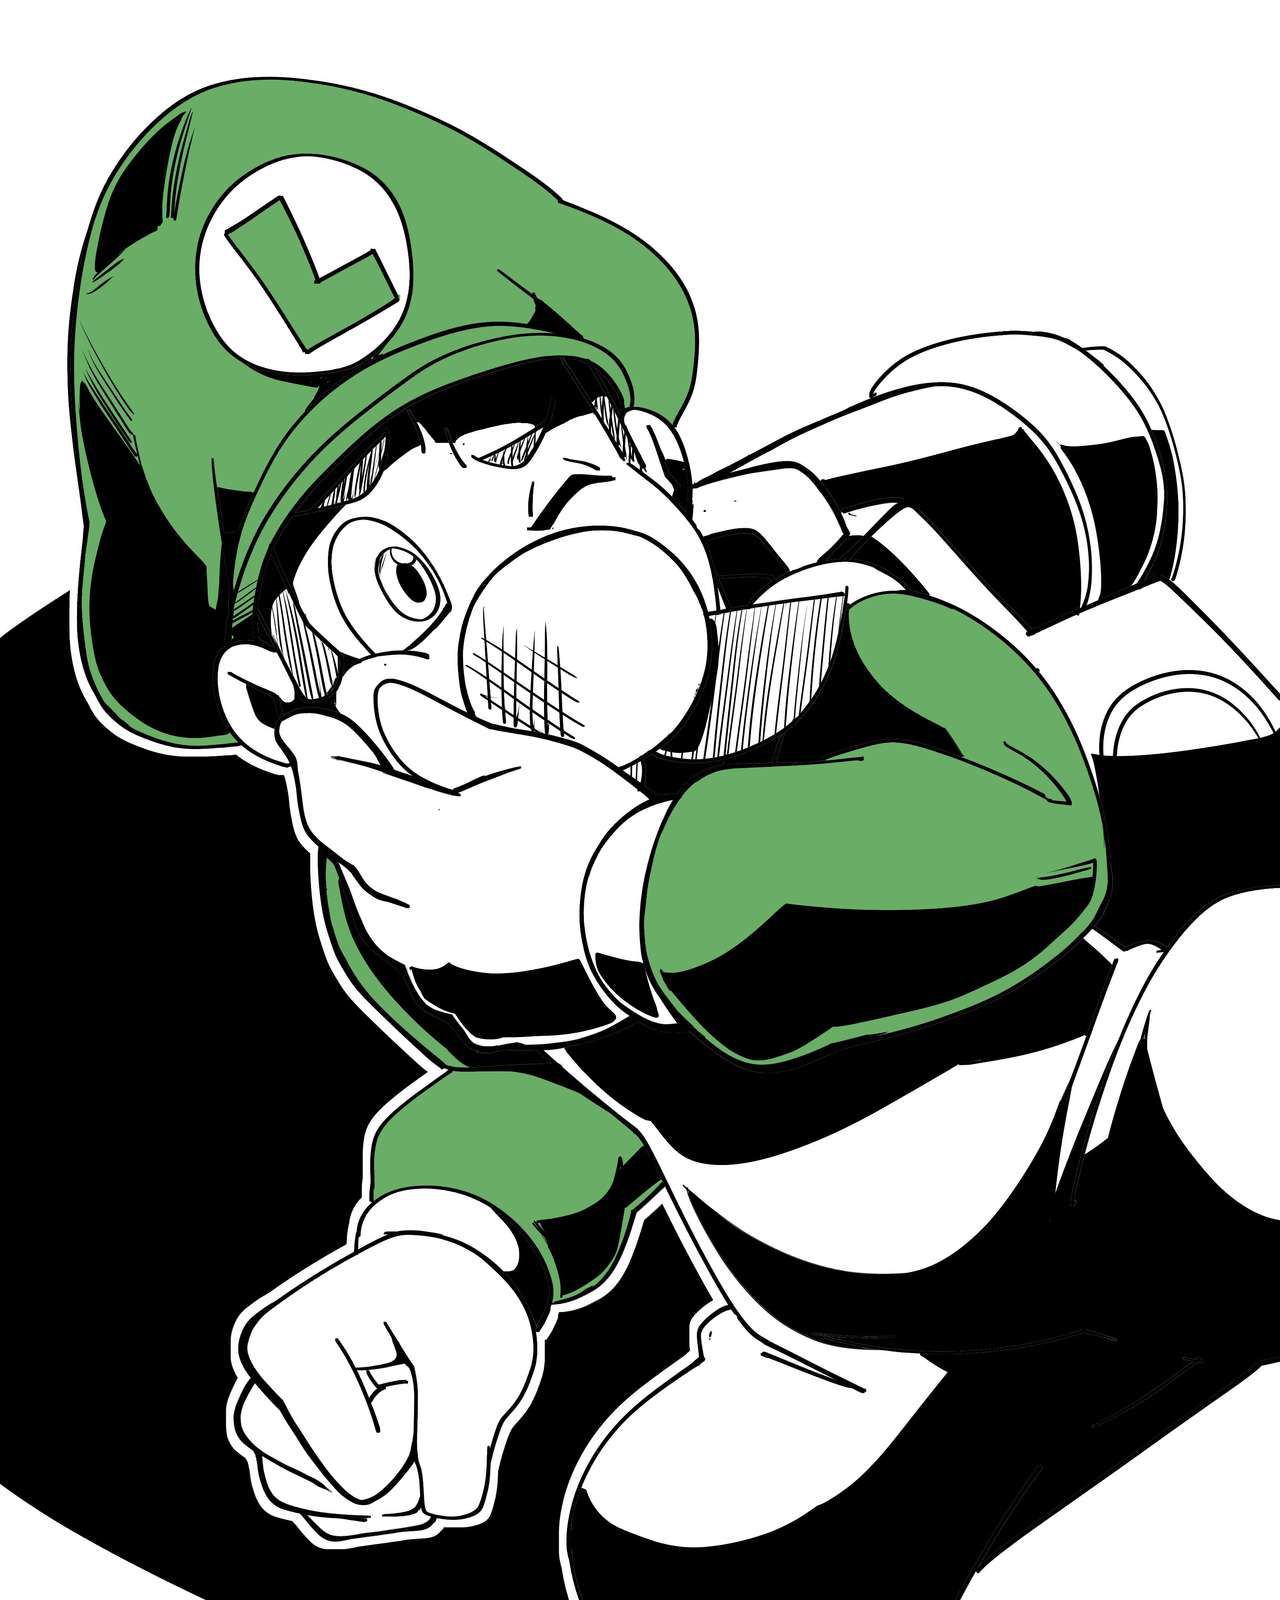 [Nisego] Inktober 2 - Luigi's Mansion (Super Mario Bros.) [Ongoing] 37